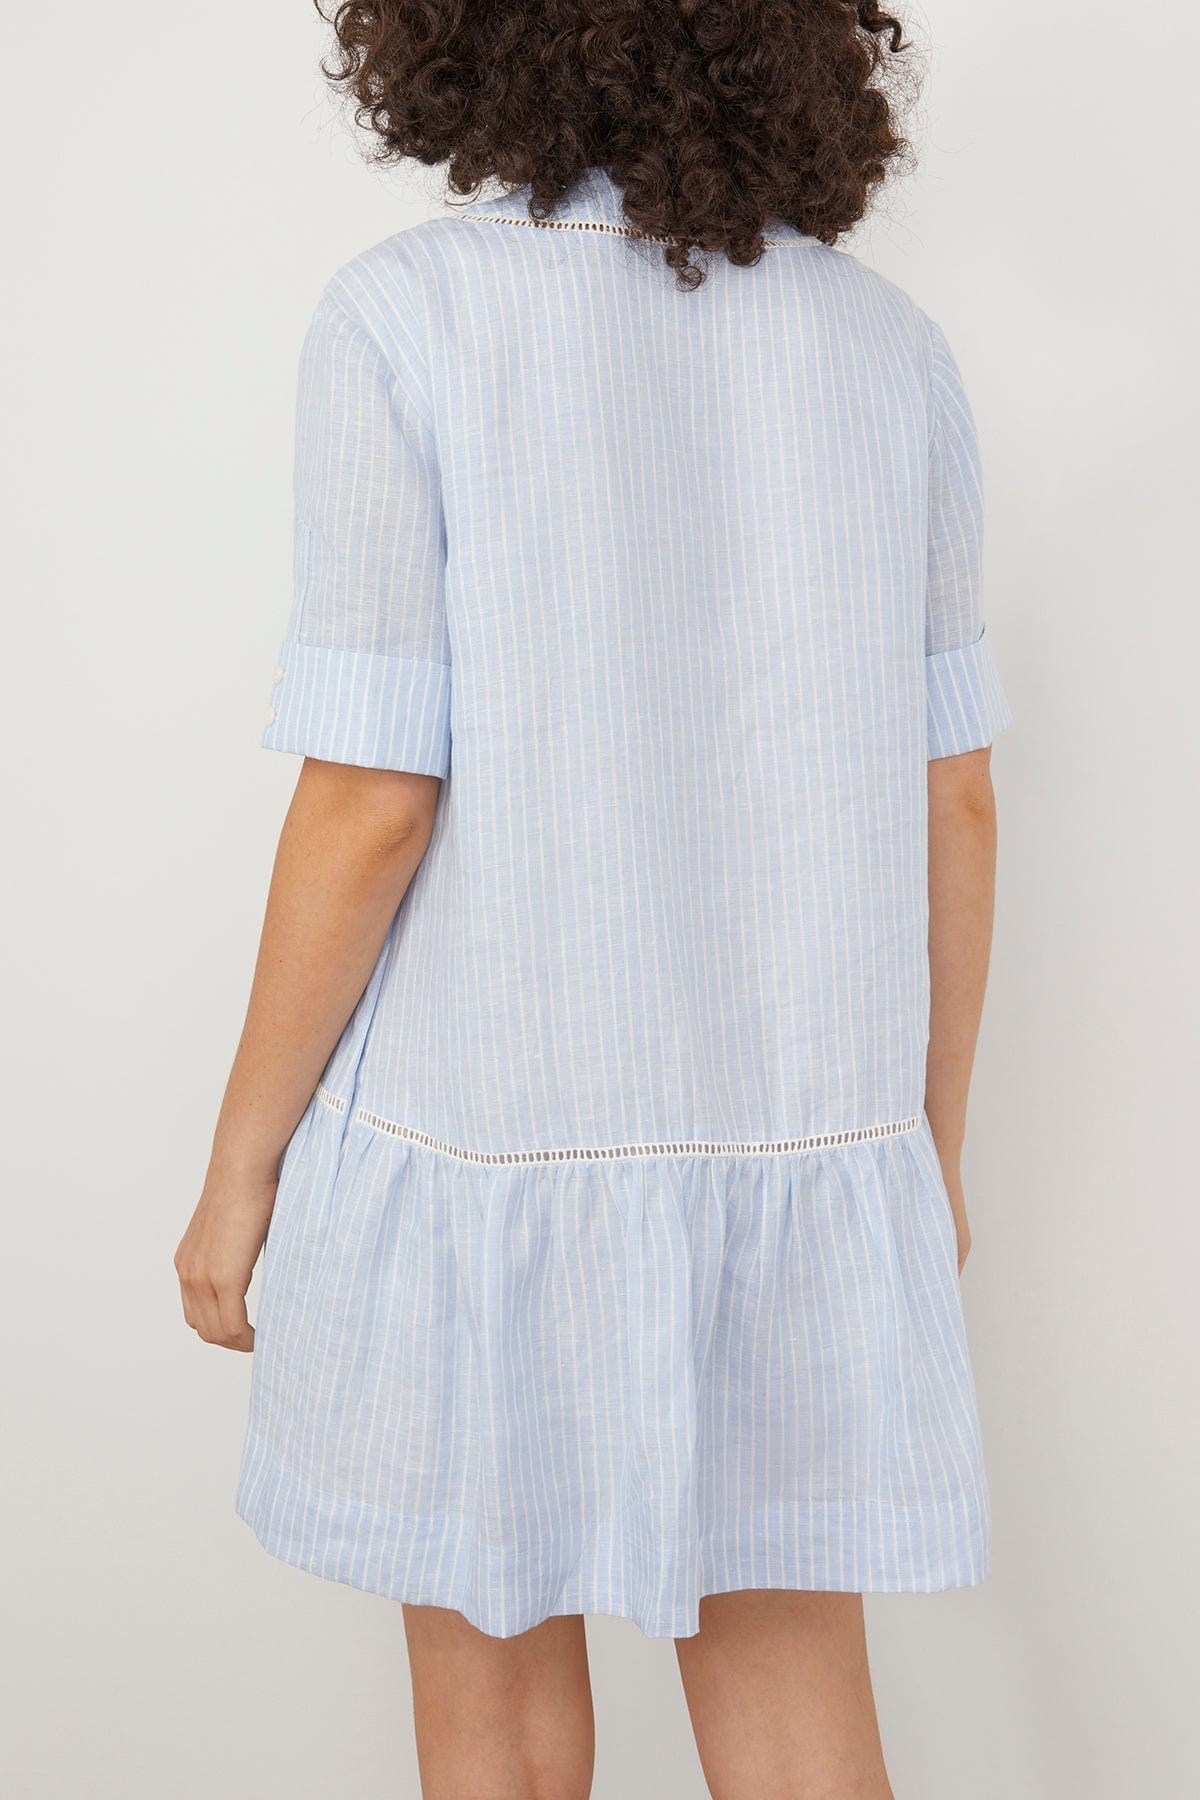 Jori Short Sleeve V-Neck Mini Dress in French Blue Stripe - 4